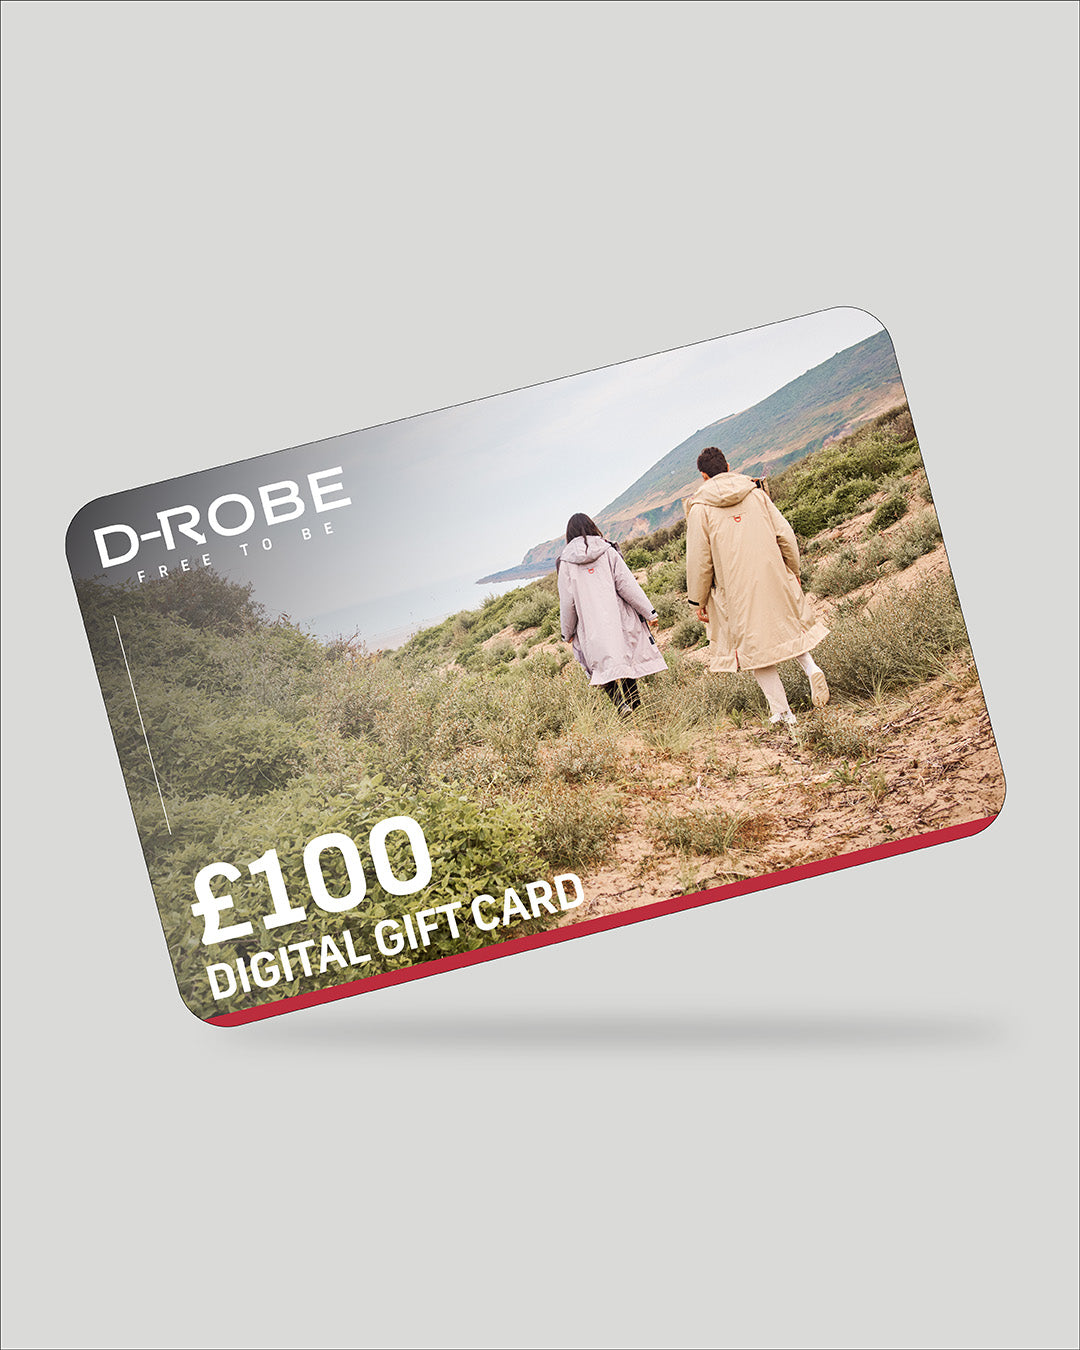 D-Robe e-Gift Card